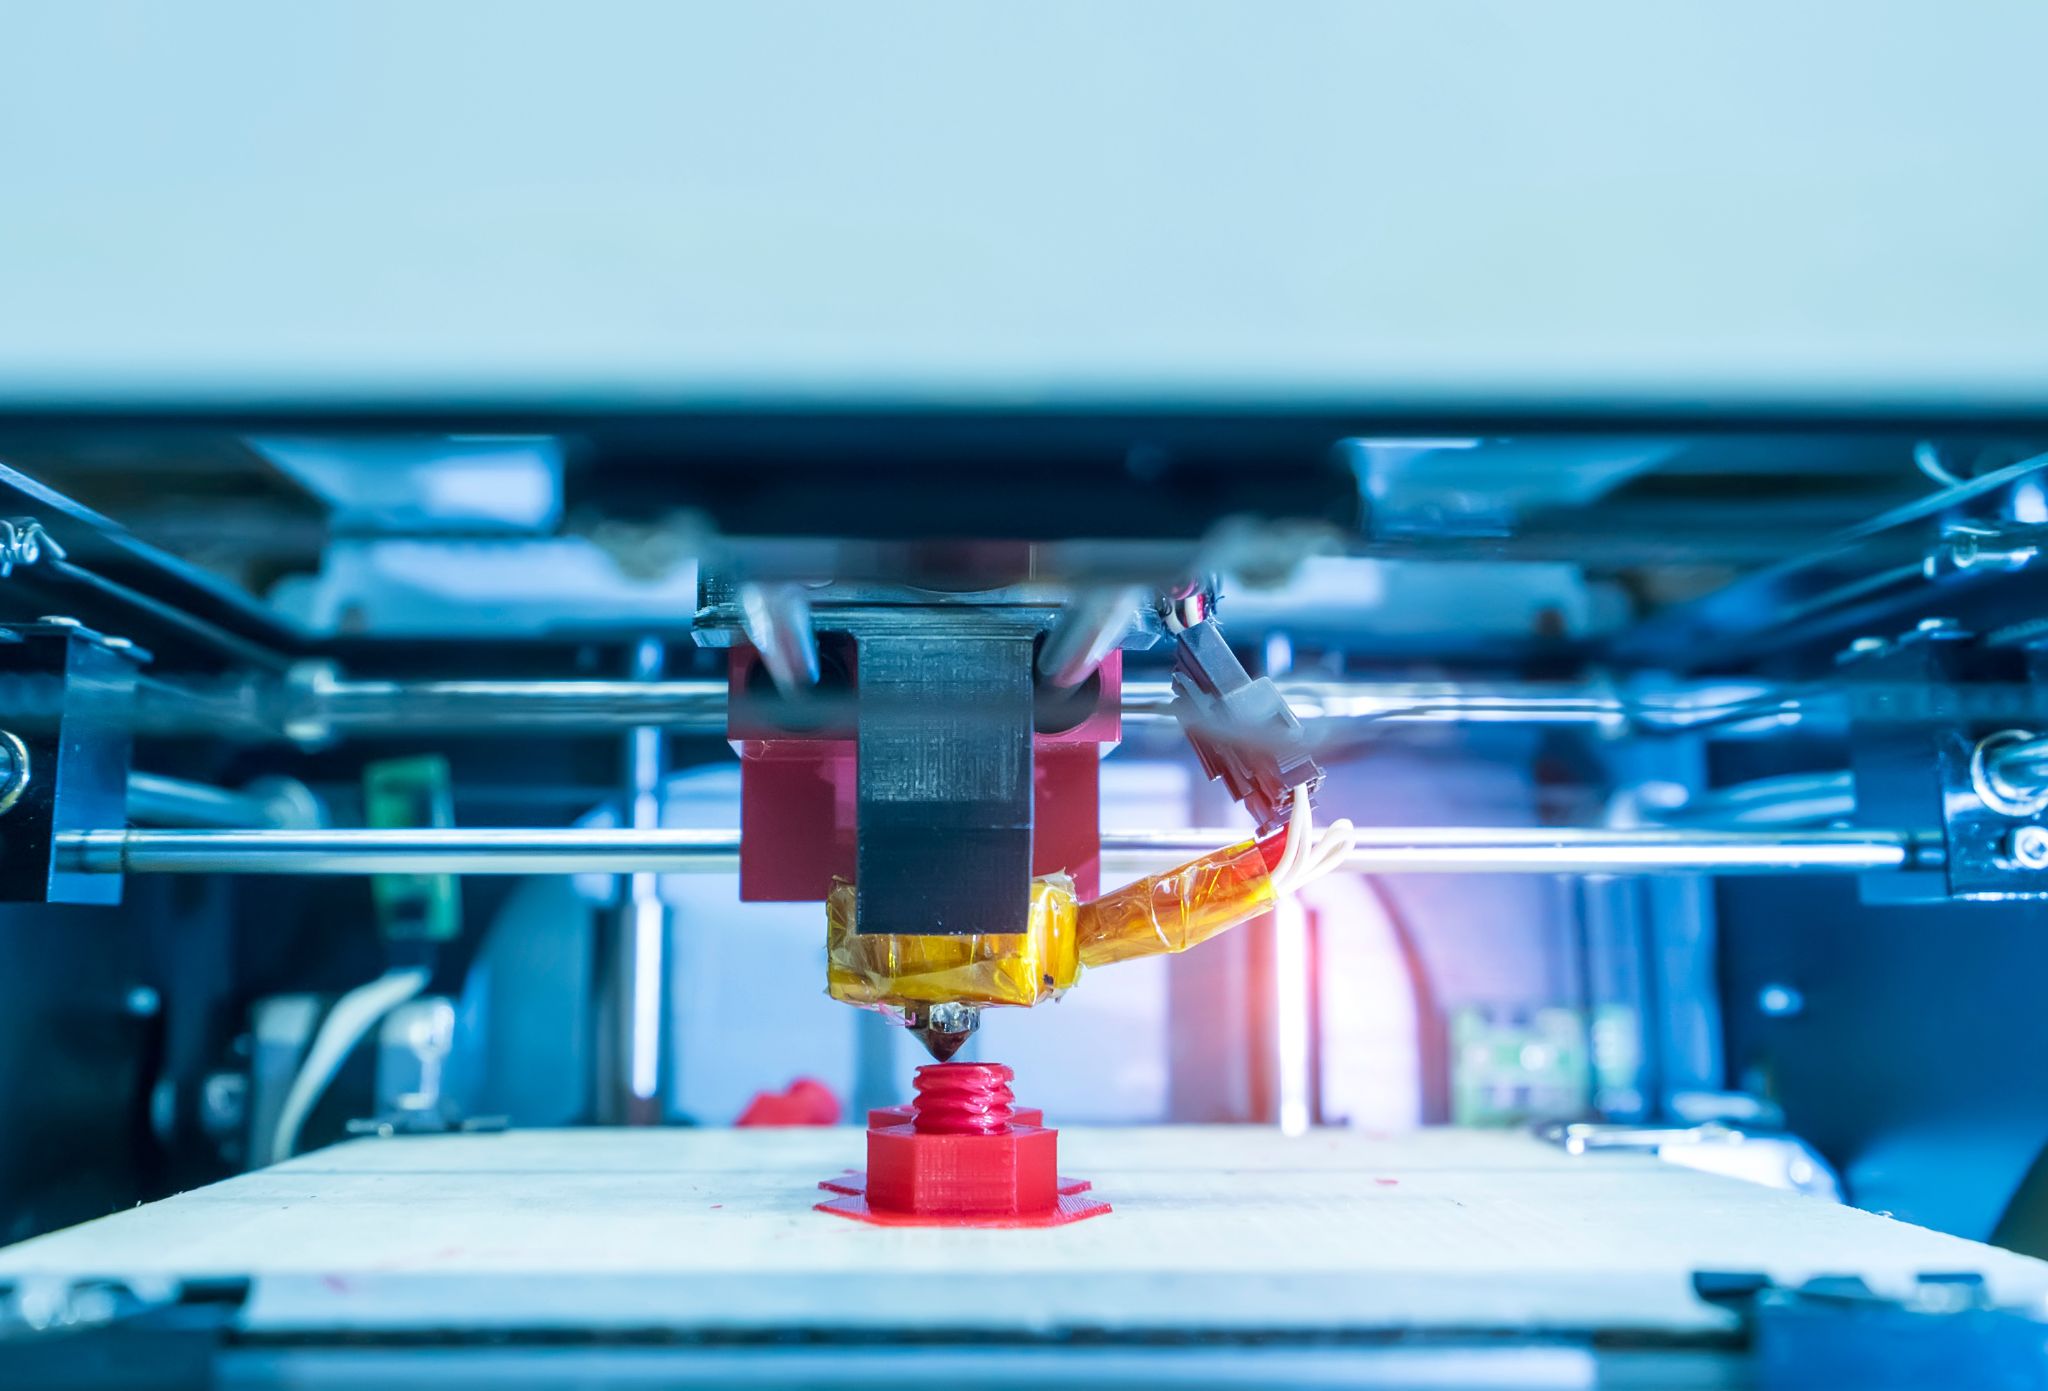 Impresión 3D: innovación y revolución tecnológica